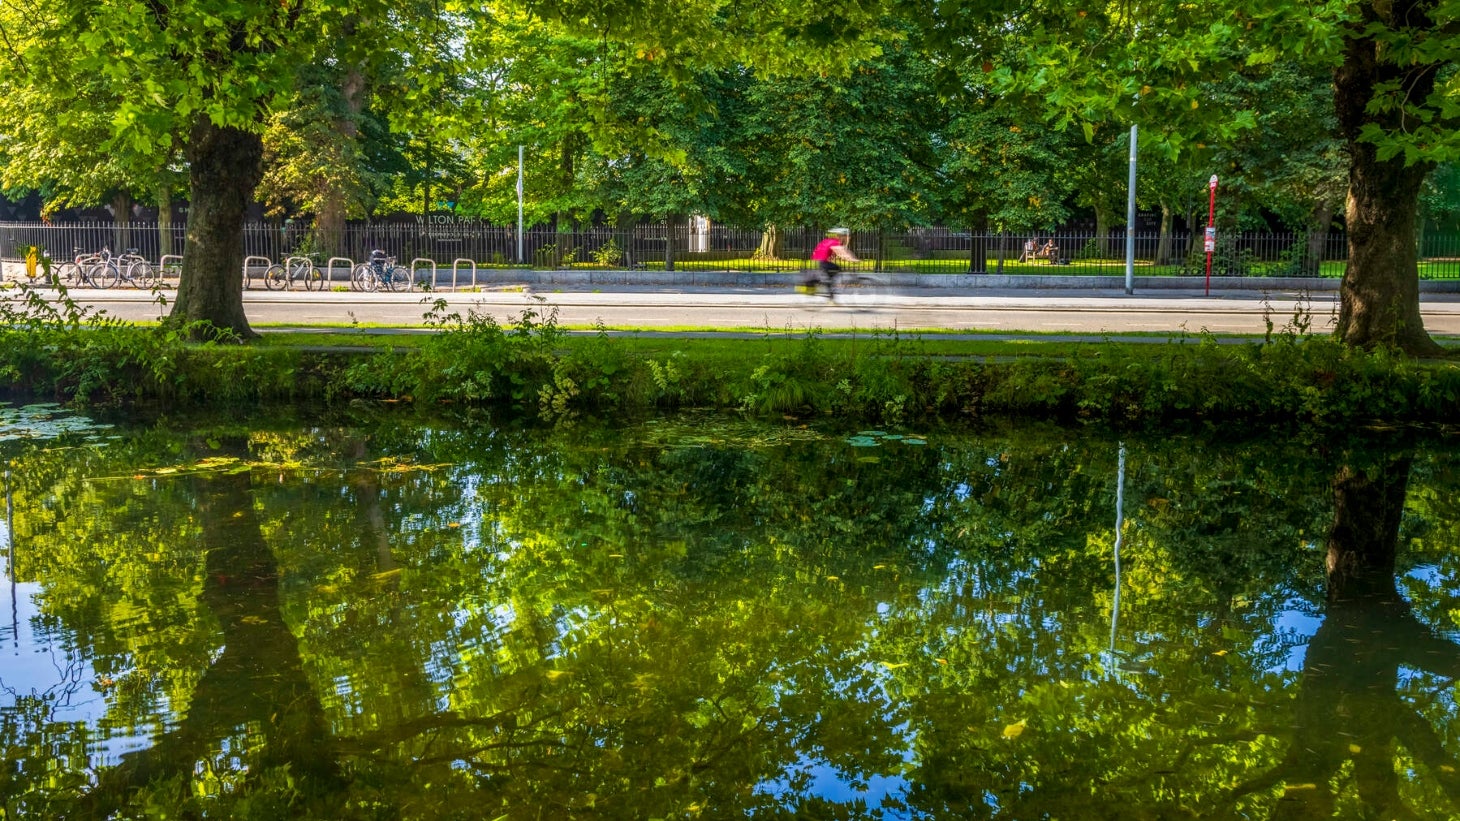 Cycling Grand Canal Dock, Dublin